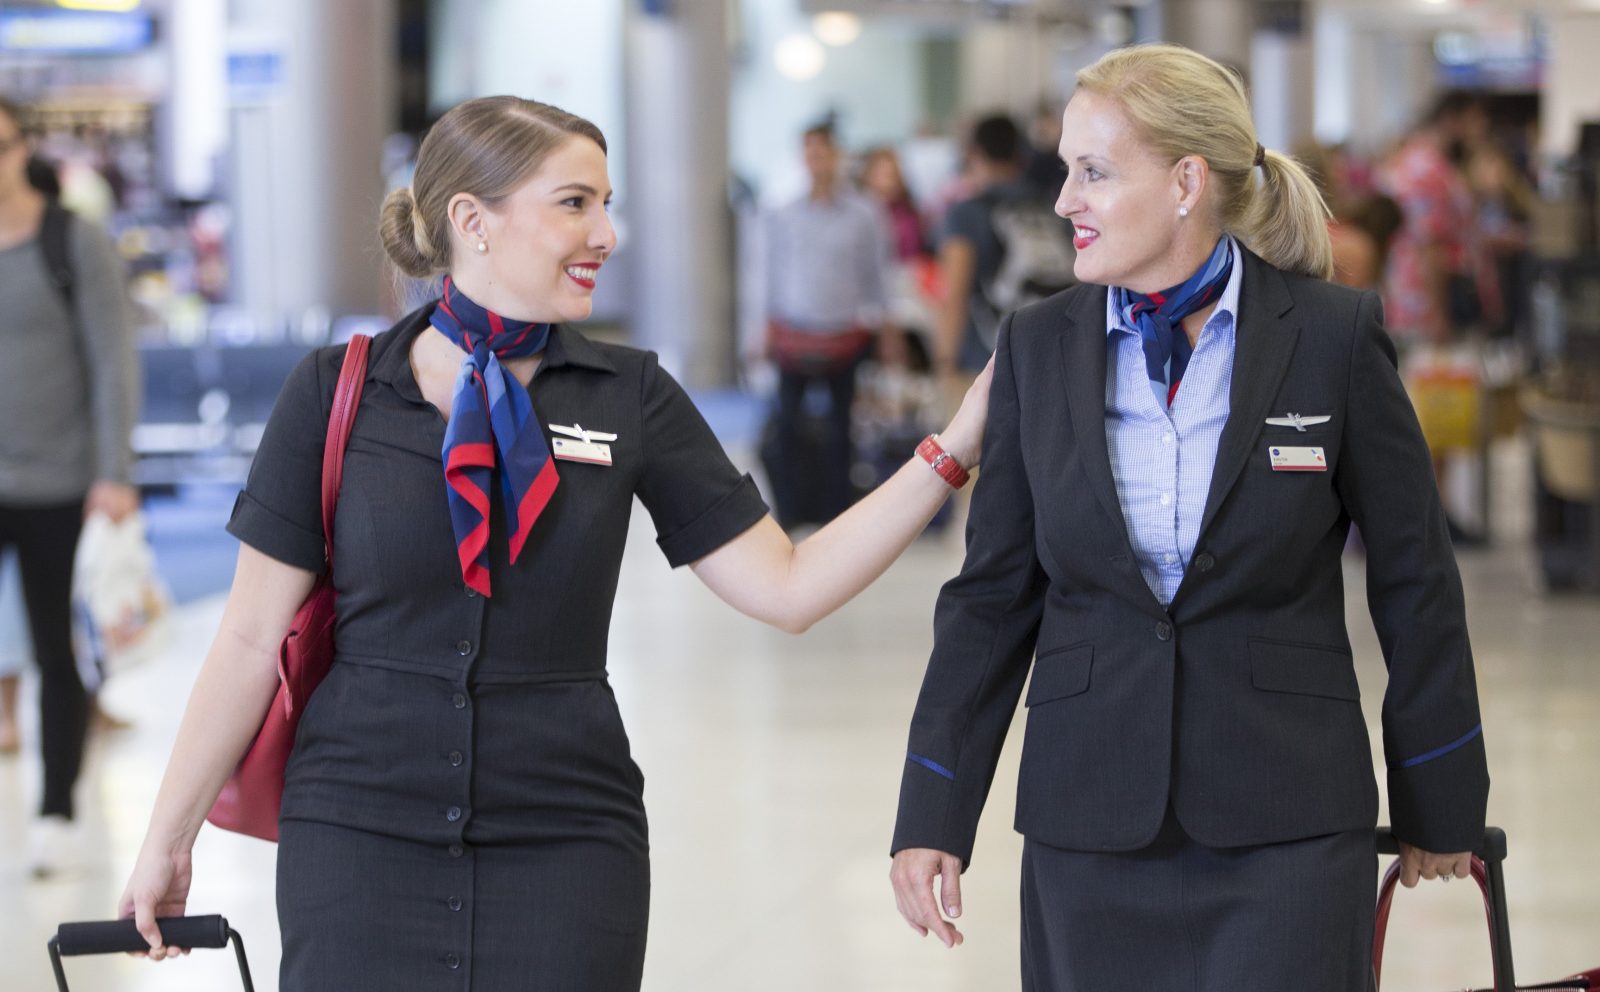 American and Southwest Flight Attendants to Receive $1,000 Cash Bonuses to "Celebrate" Tax Reform Legislation